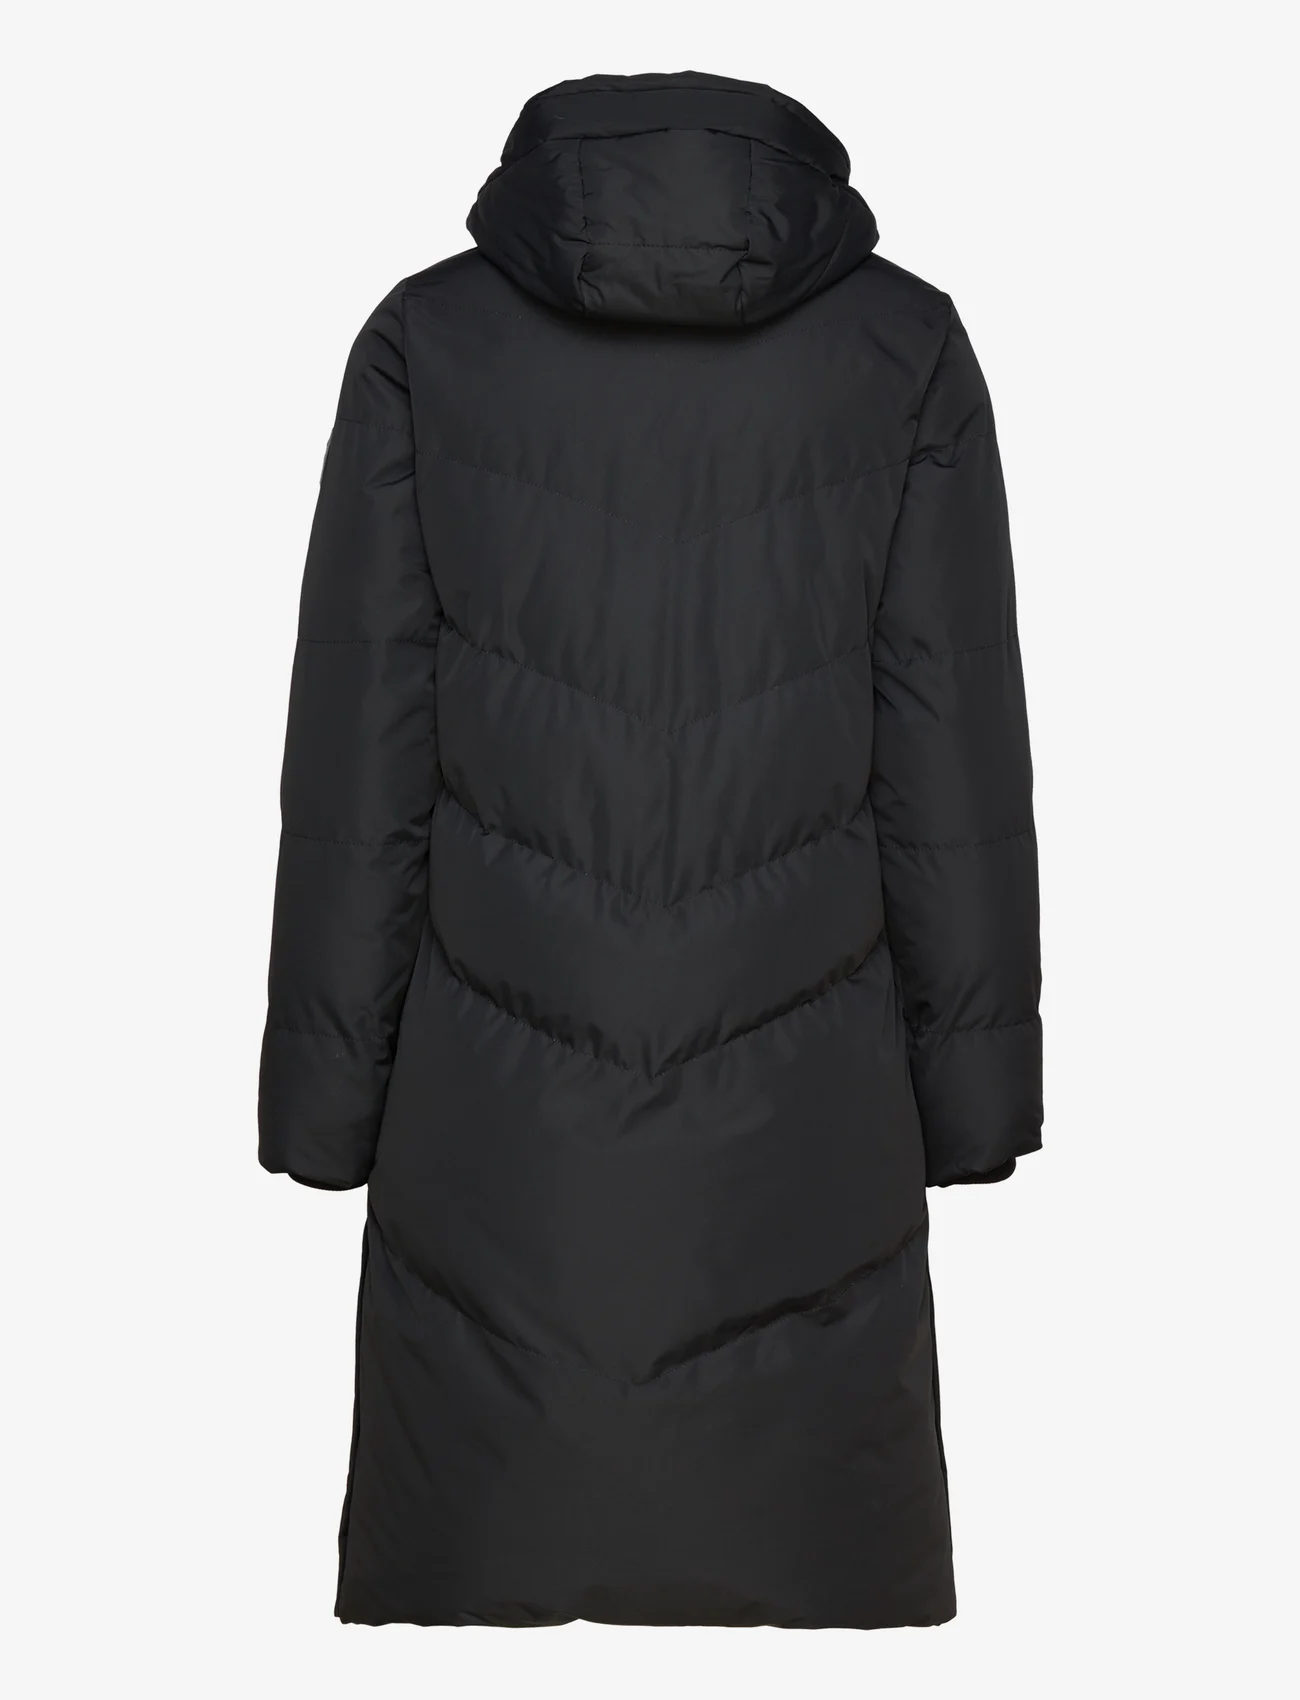 Garcia - ladies outdoor jackets - winter jackets - black - 1